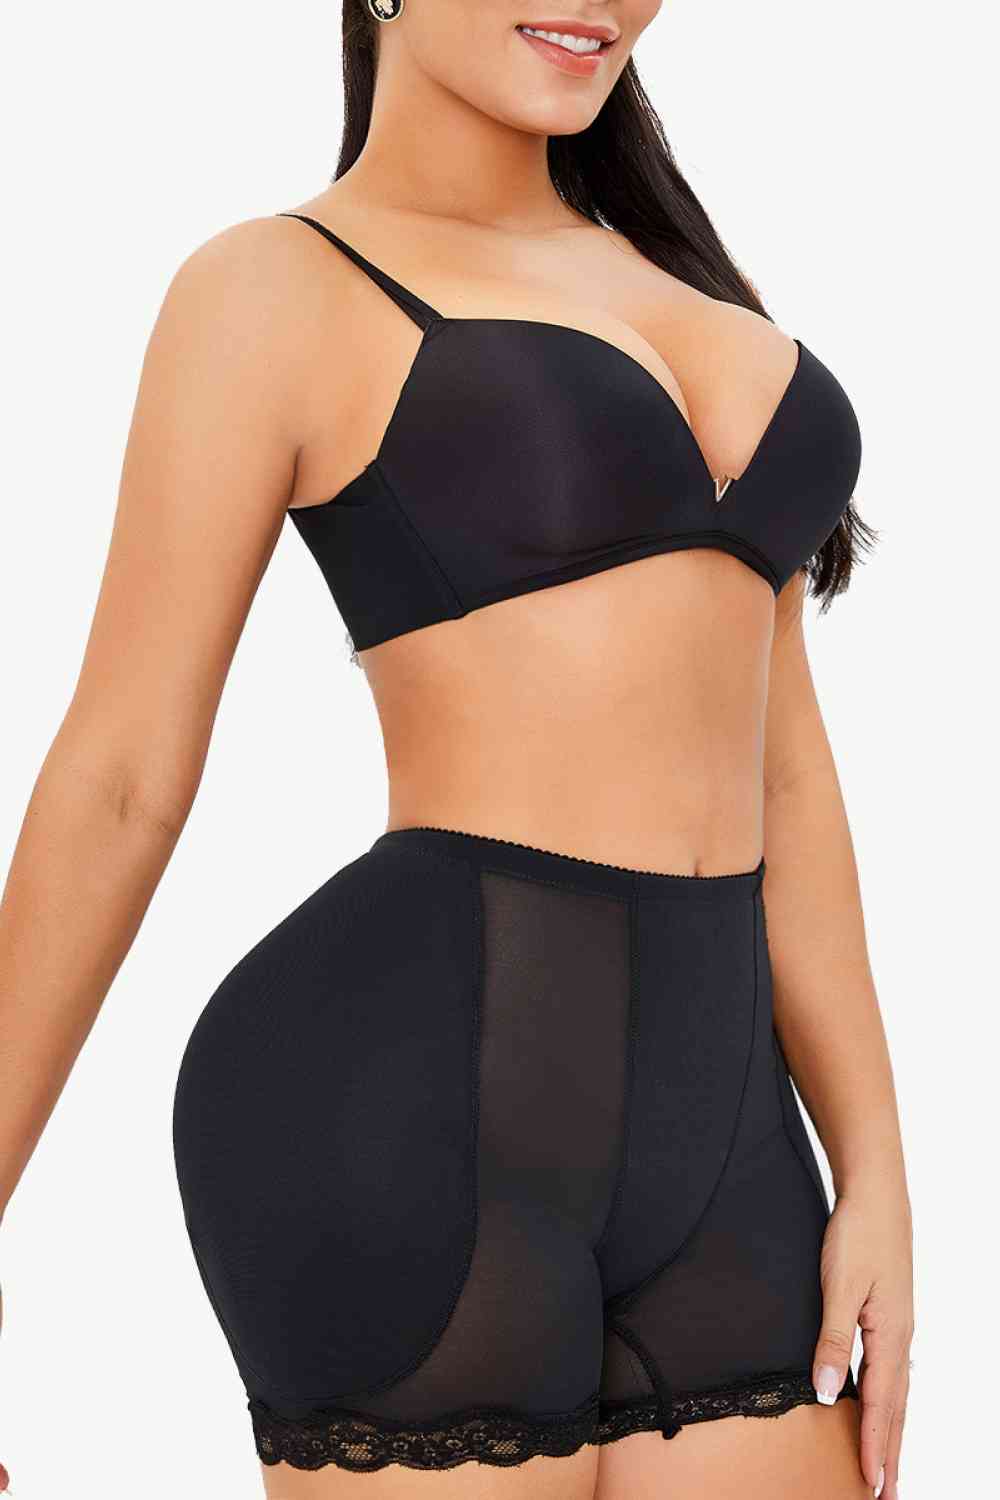 TEEK - Black Full Size Scalloped Lace Trim Shaping Shorts UNDERWEAR TEEK Trend   